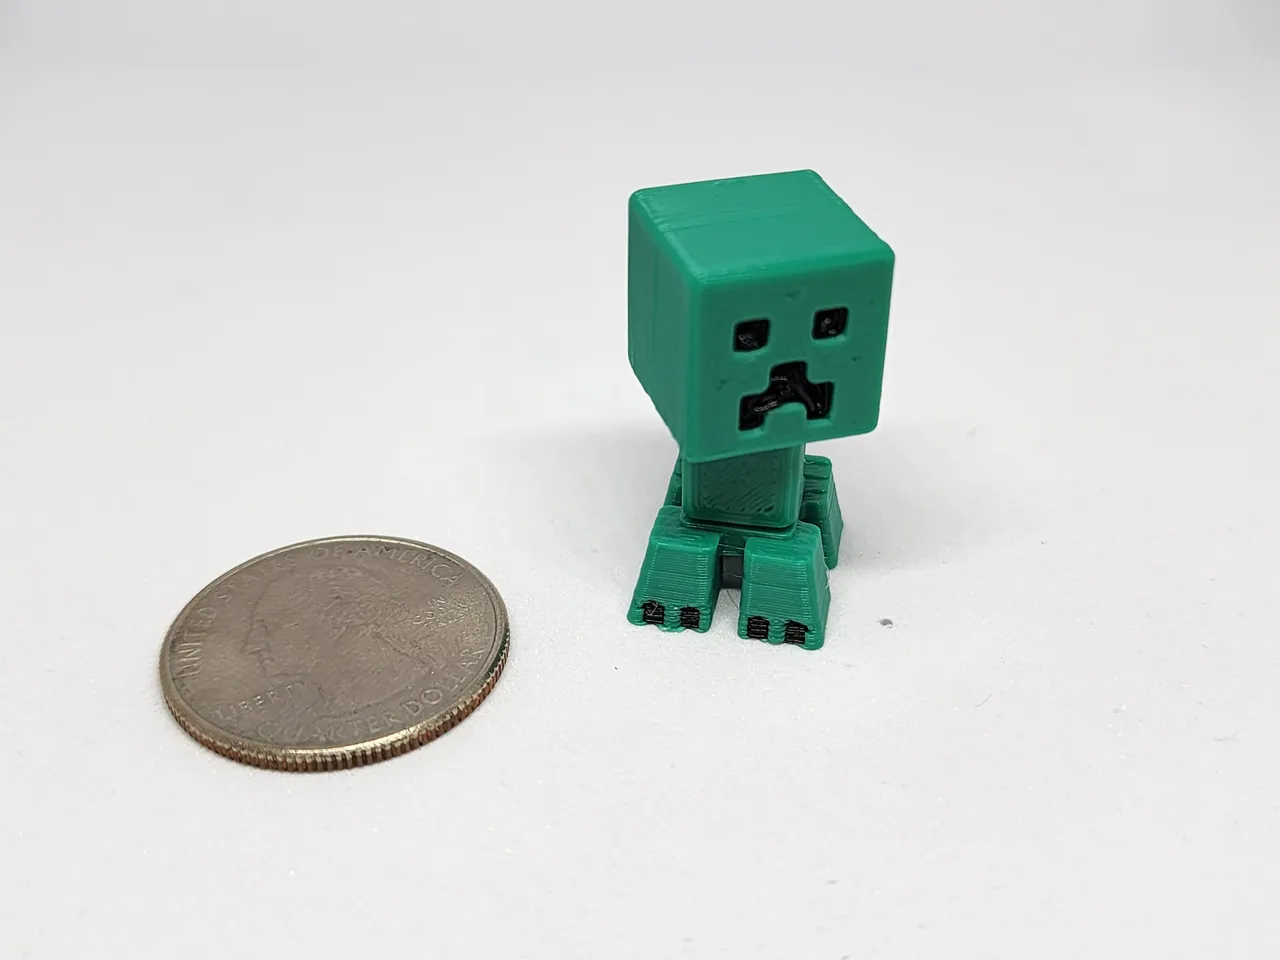 Minecraft Creeper Figure 